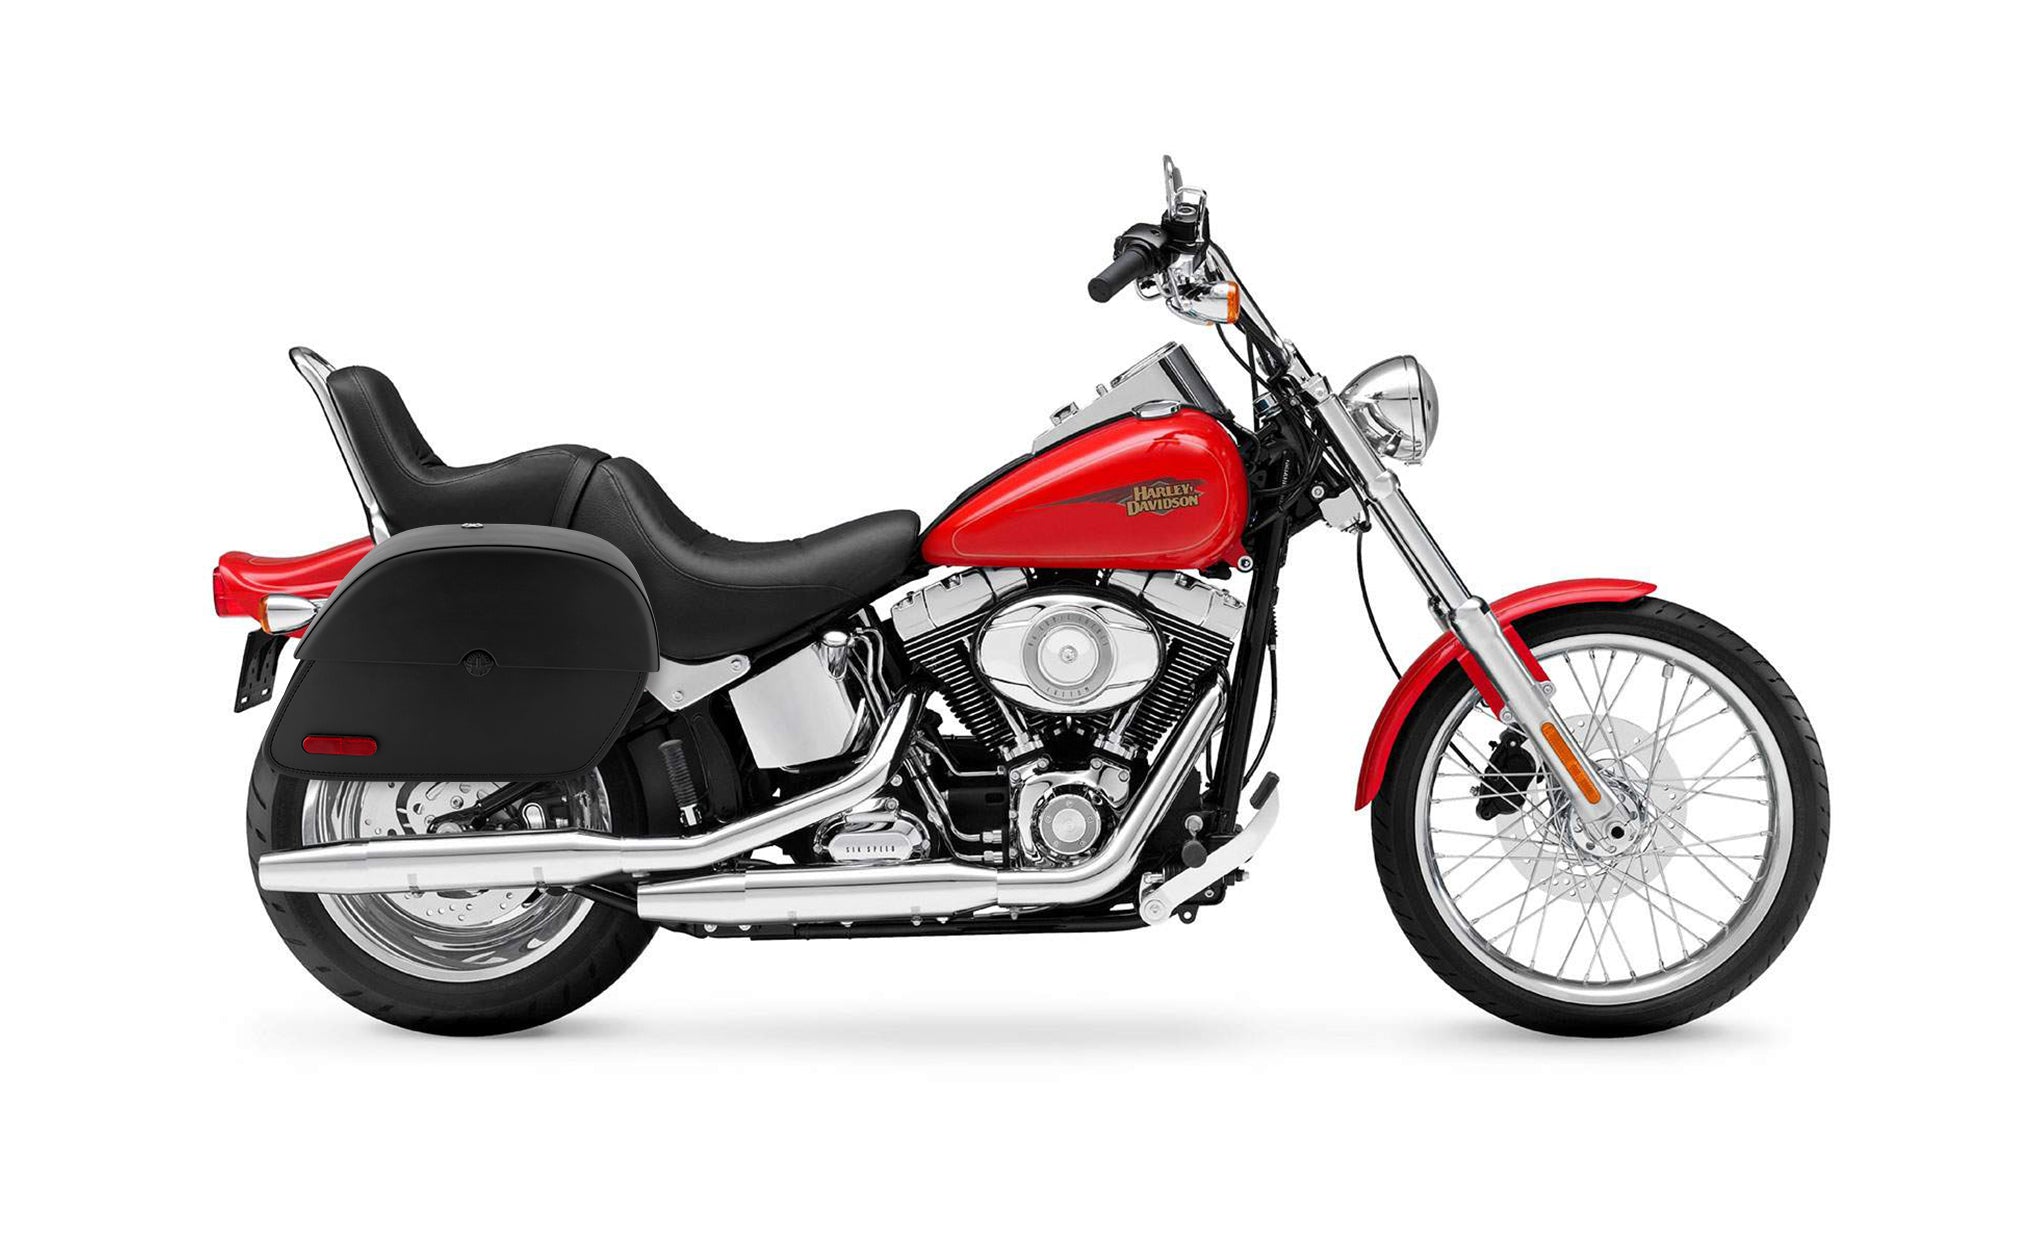 Viking Panzer Large Leather Motorcycle Saddlebags For Harley Davidson Softail Custom Fxstc on Bike Photo @expand